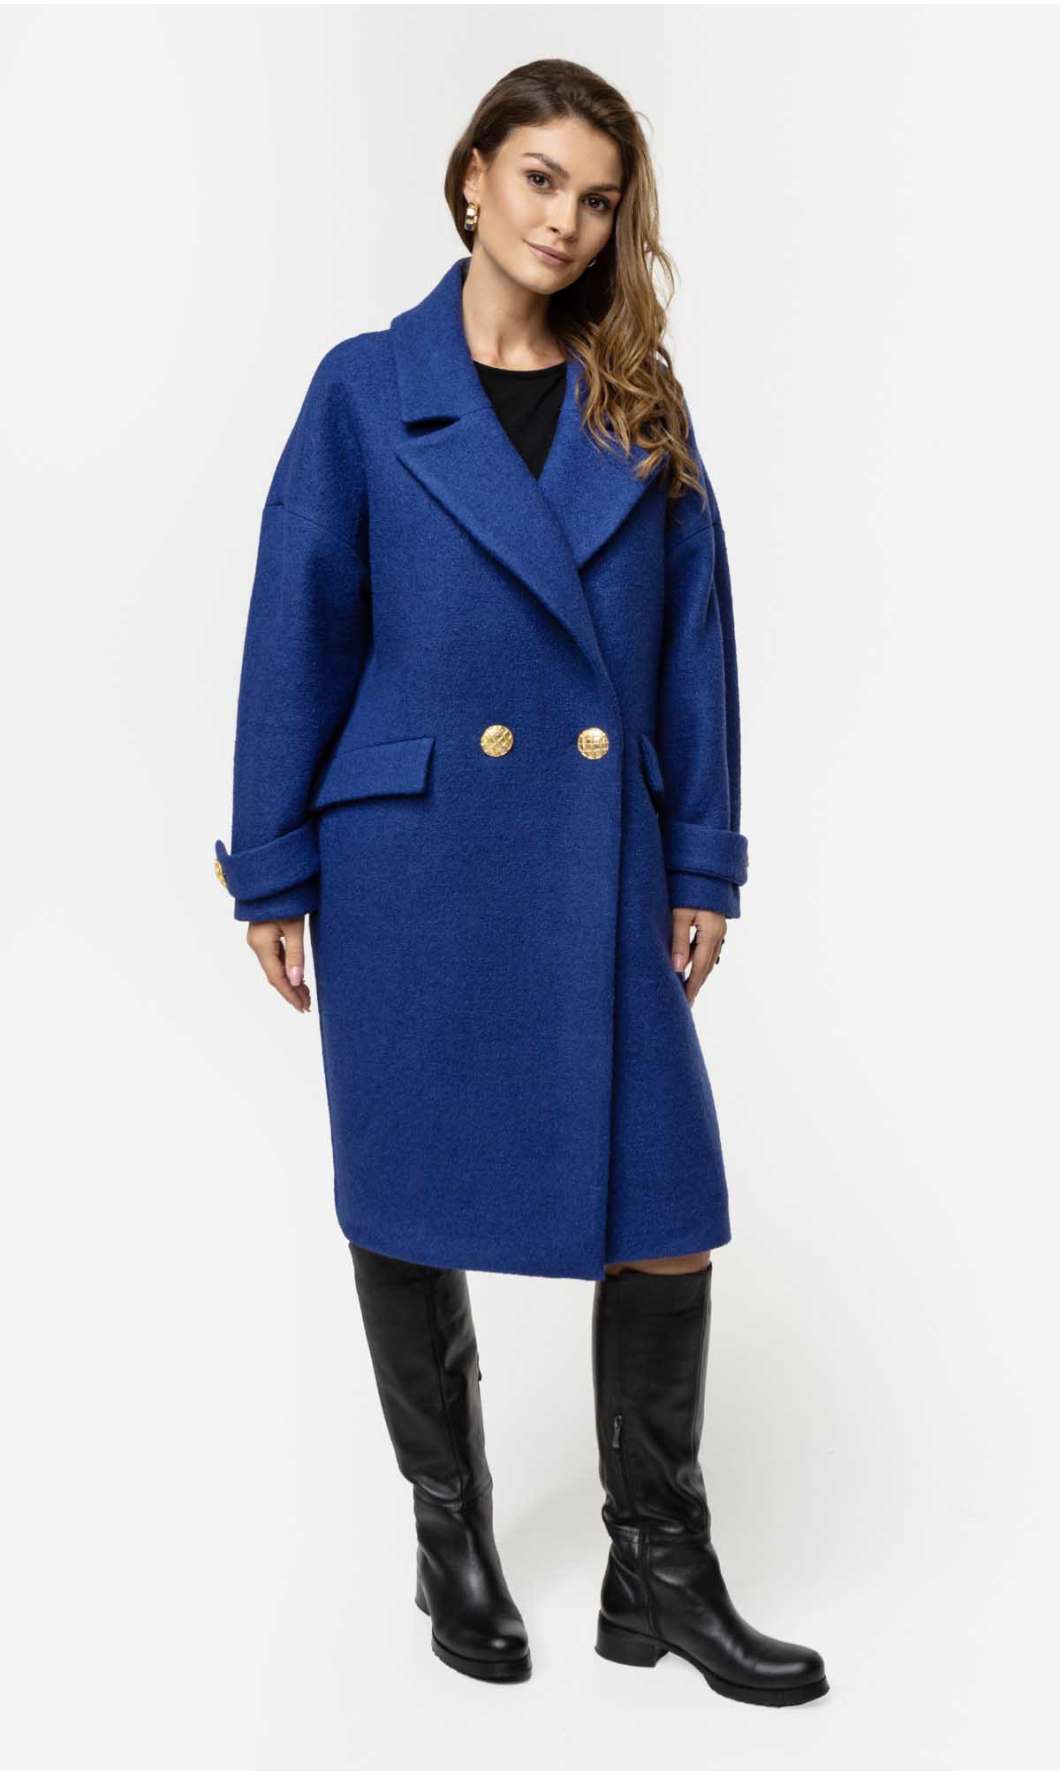 STELLA coat - navy blue